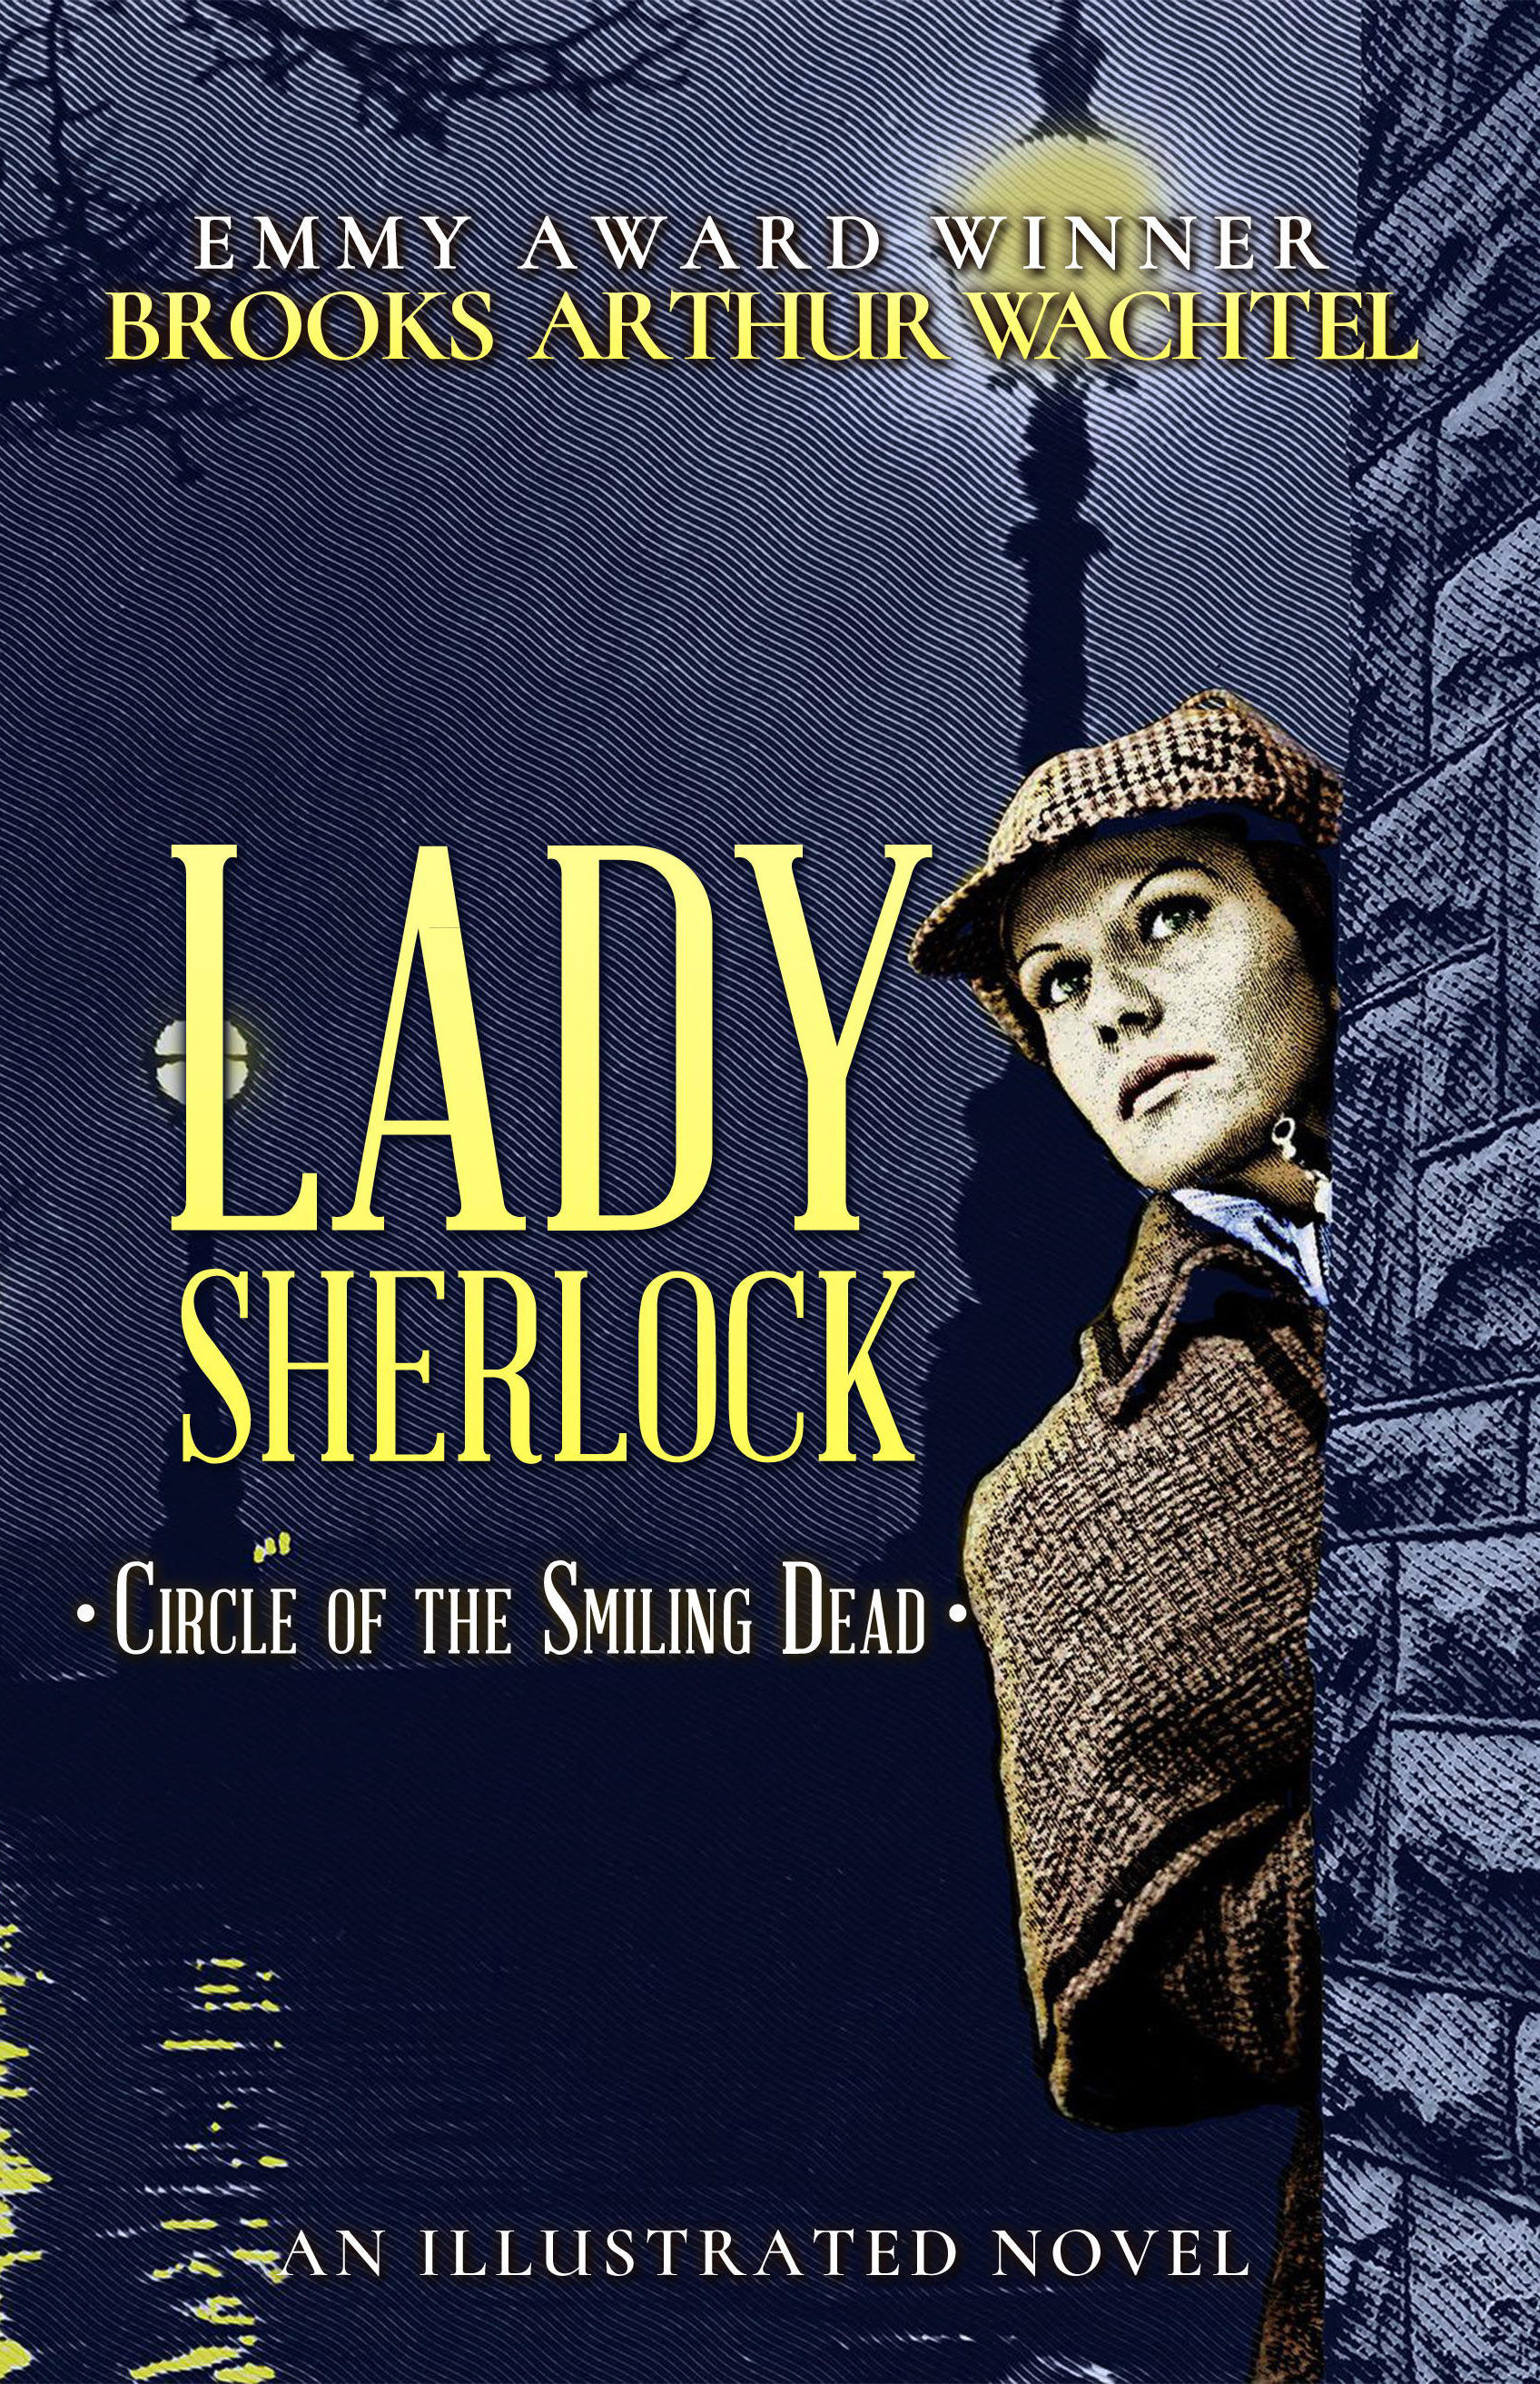 Lady Sherlock